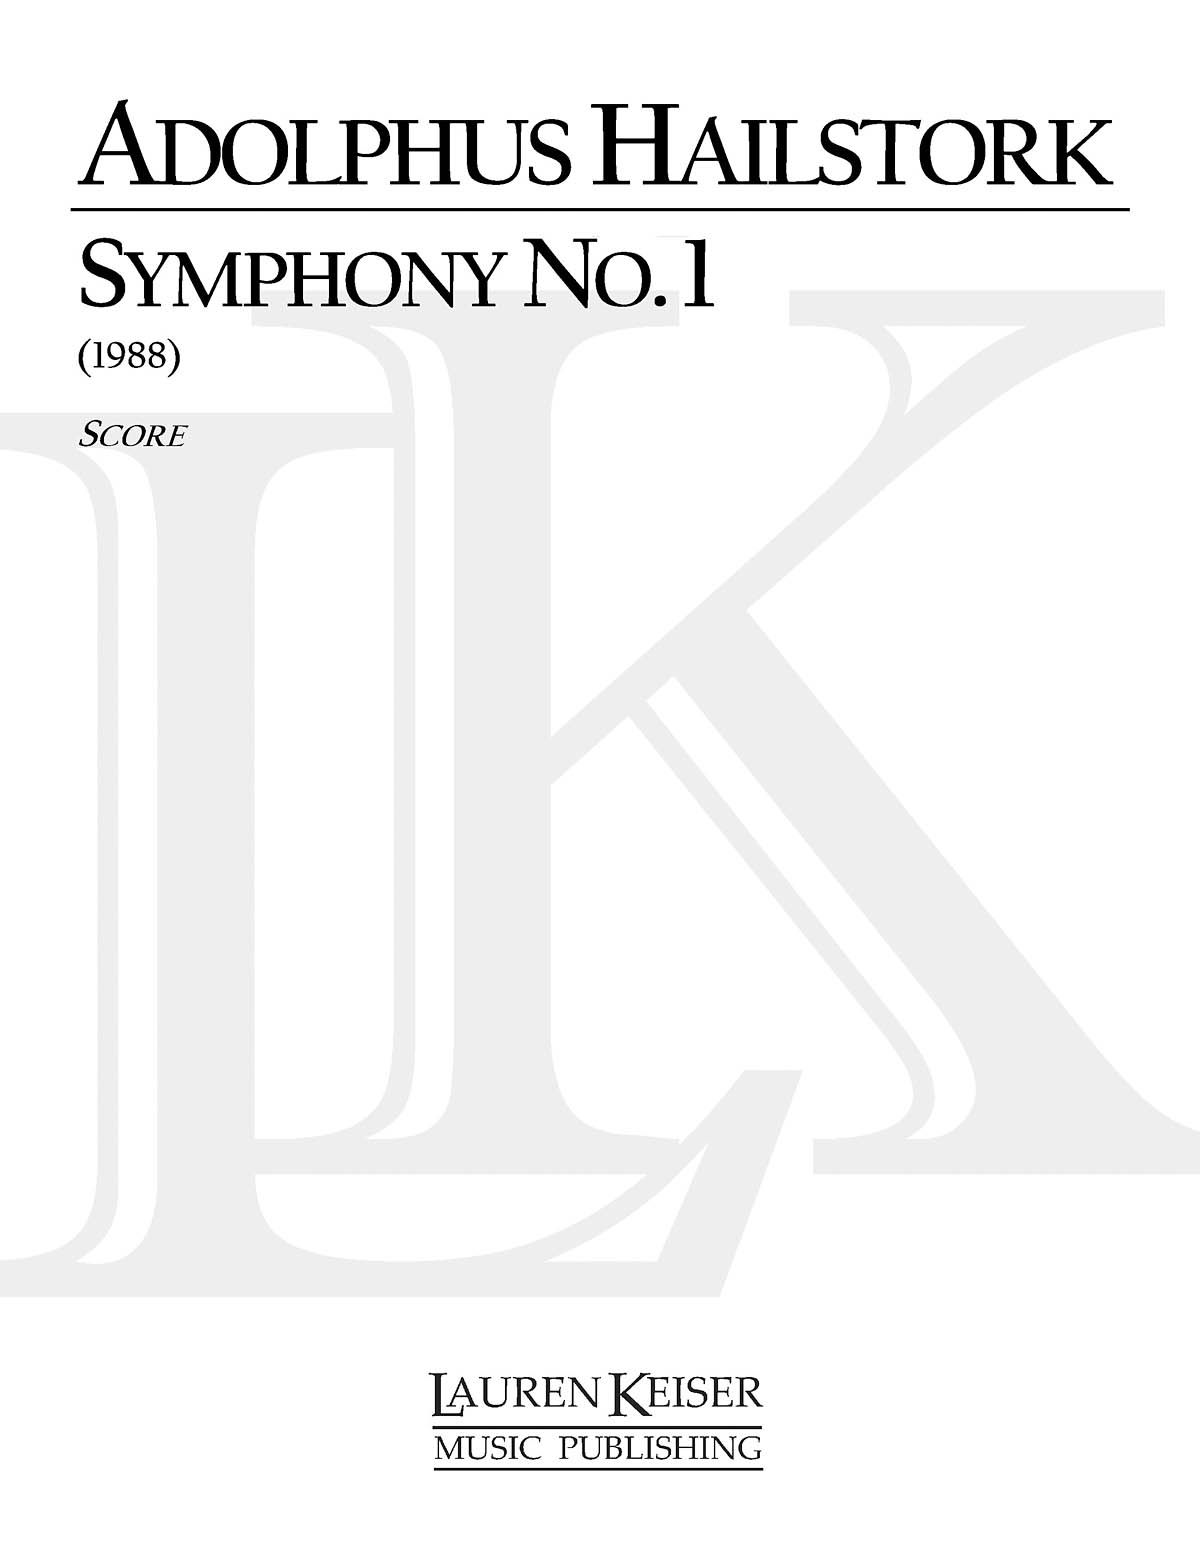 Robert Starer: Kli Zemer: Clarinet and Accomp.: Instrumental Album